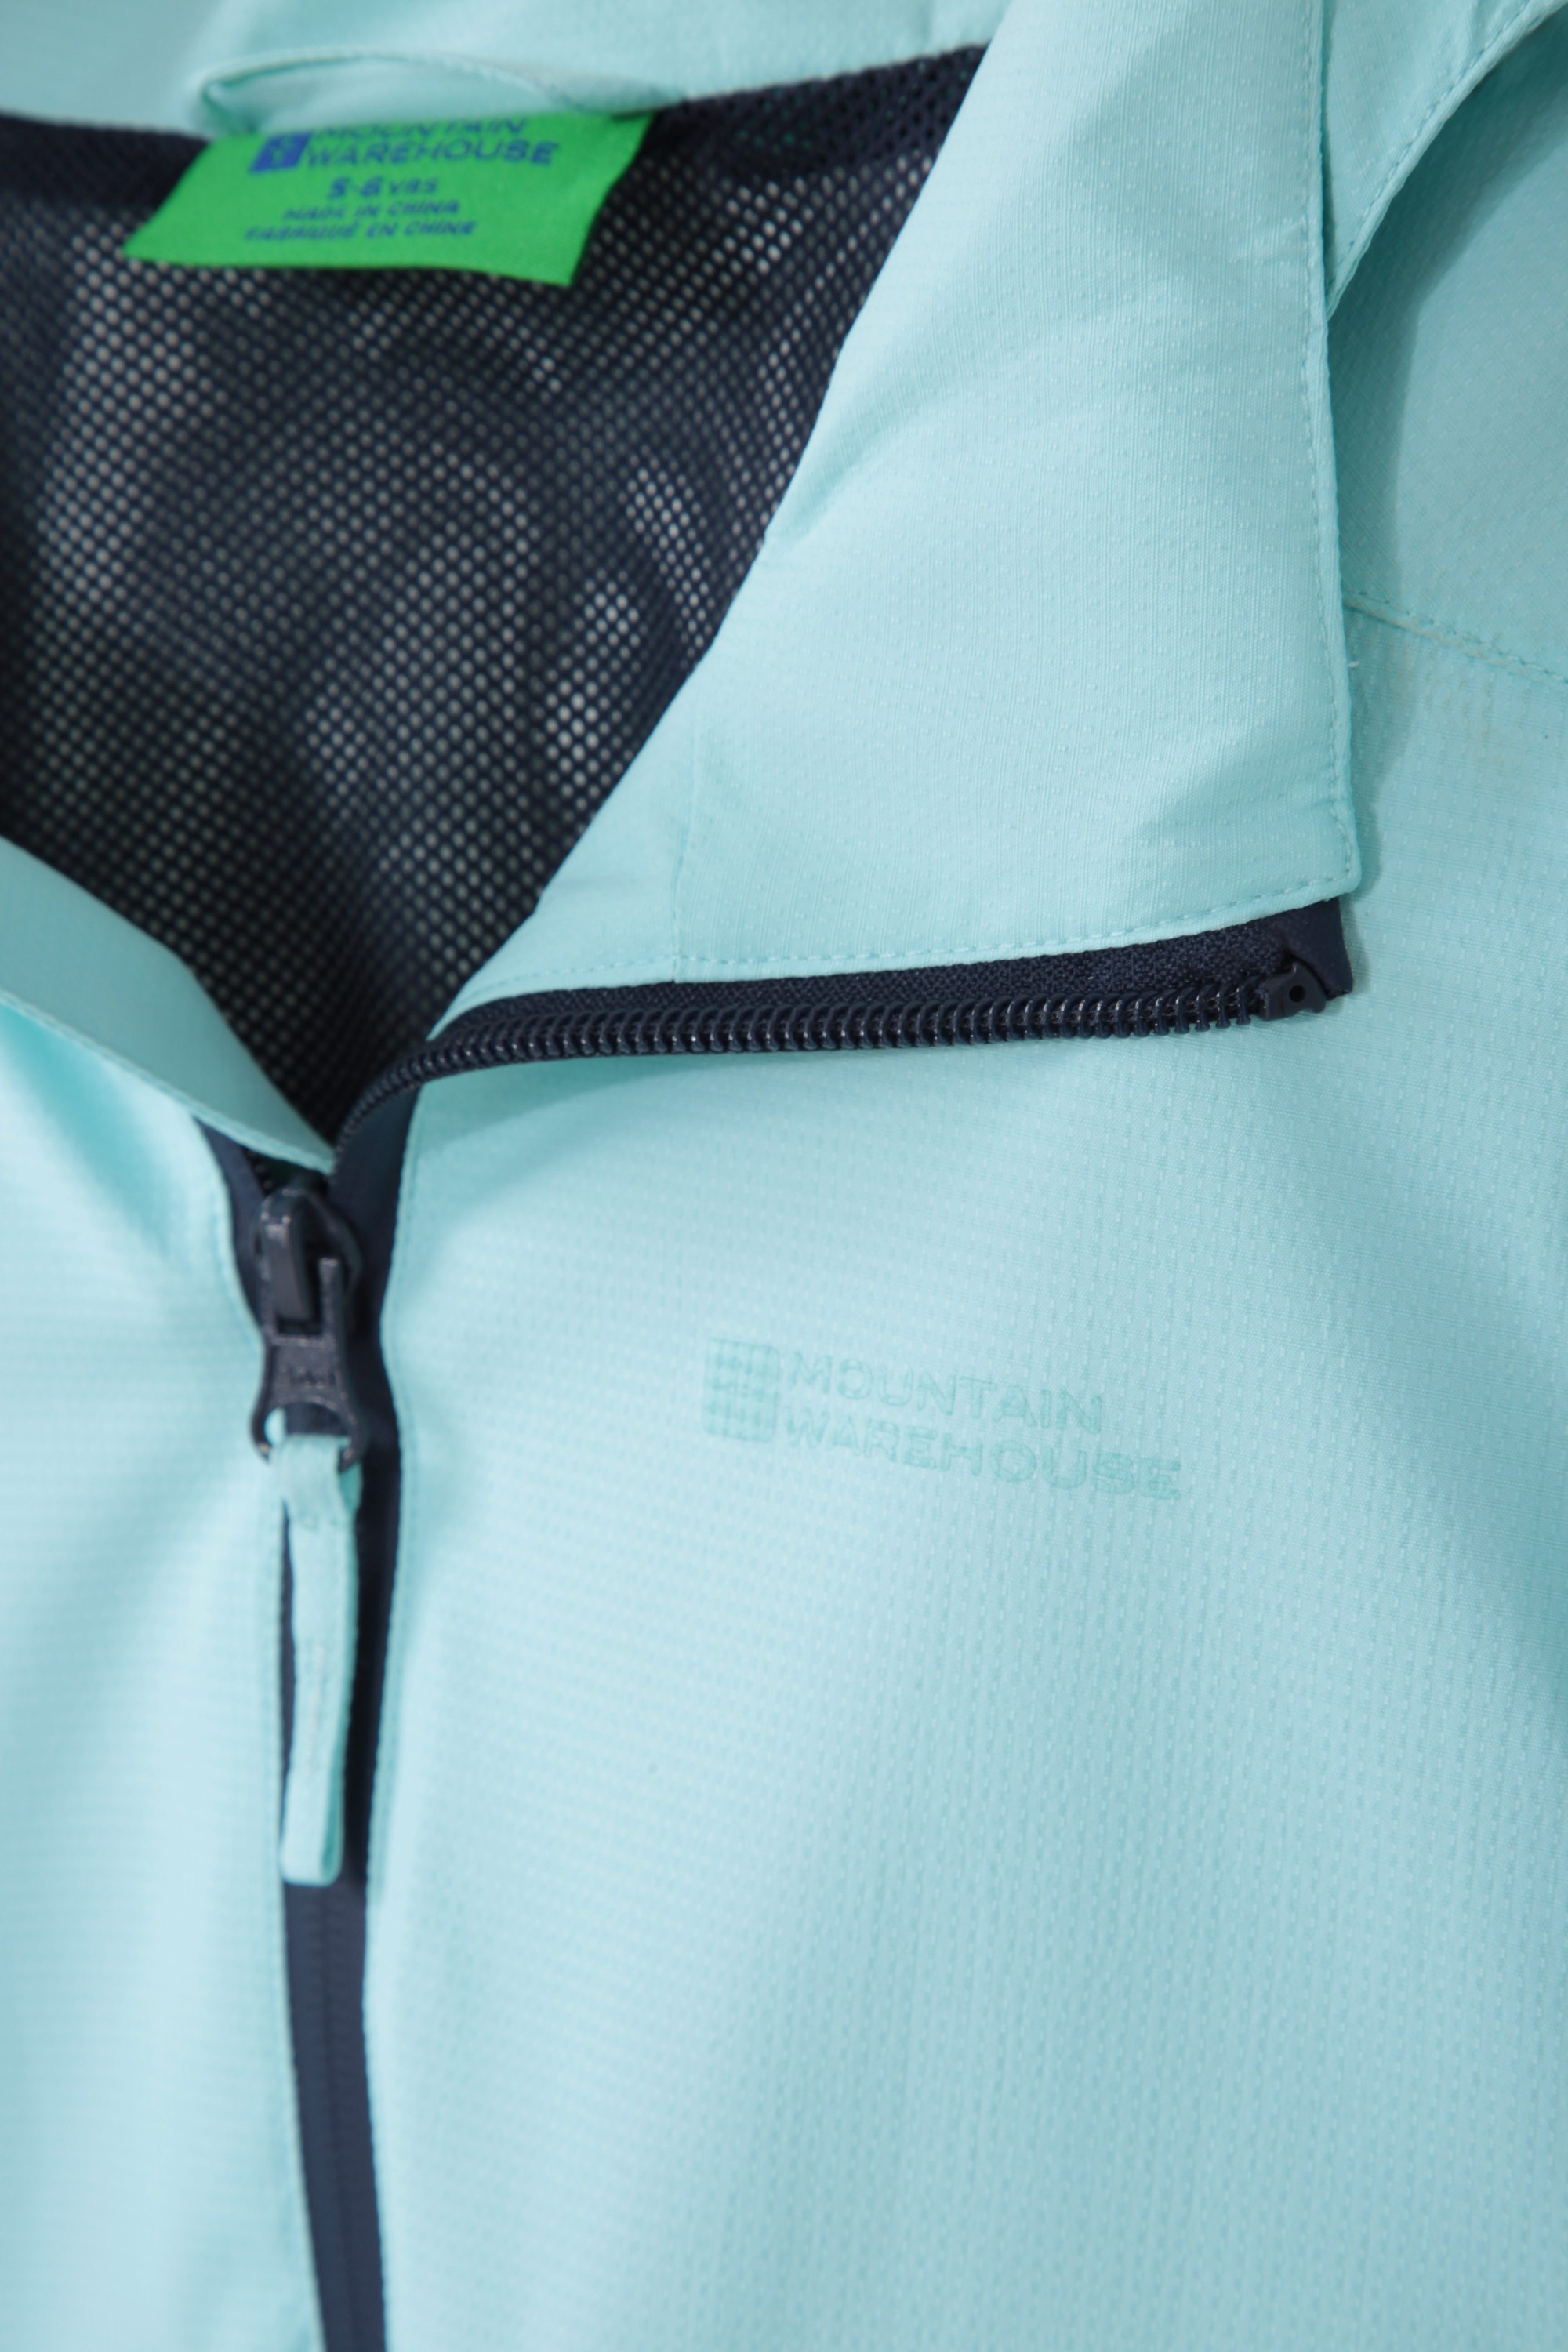 Taped Seams Mountain Warehouse Cloud Burst Kids Waterproof Jacket Zipped Pockets Breathable Detachable Hood